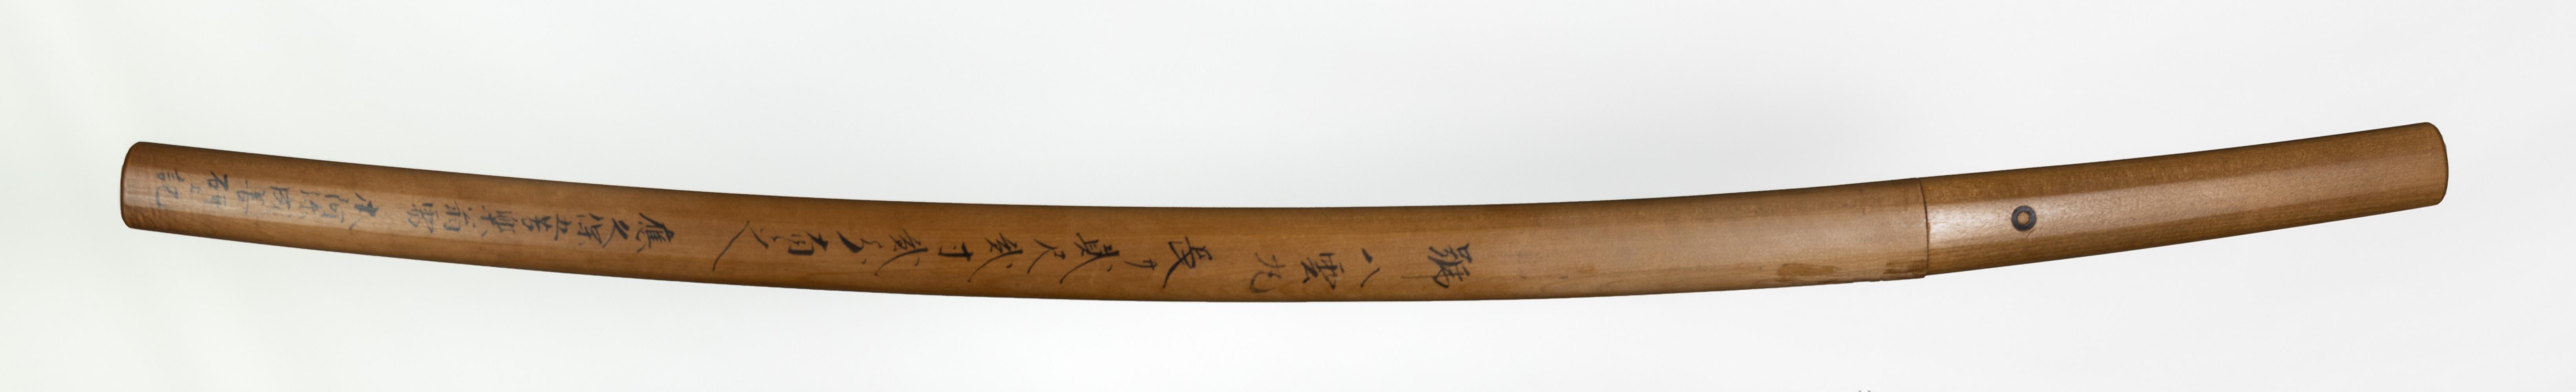 18th Century and Earlier Japanese Sword, Katana Named “Yakumo”, NBTHK Jūyō Tōken, 14th Century